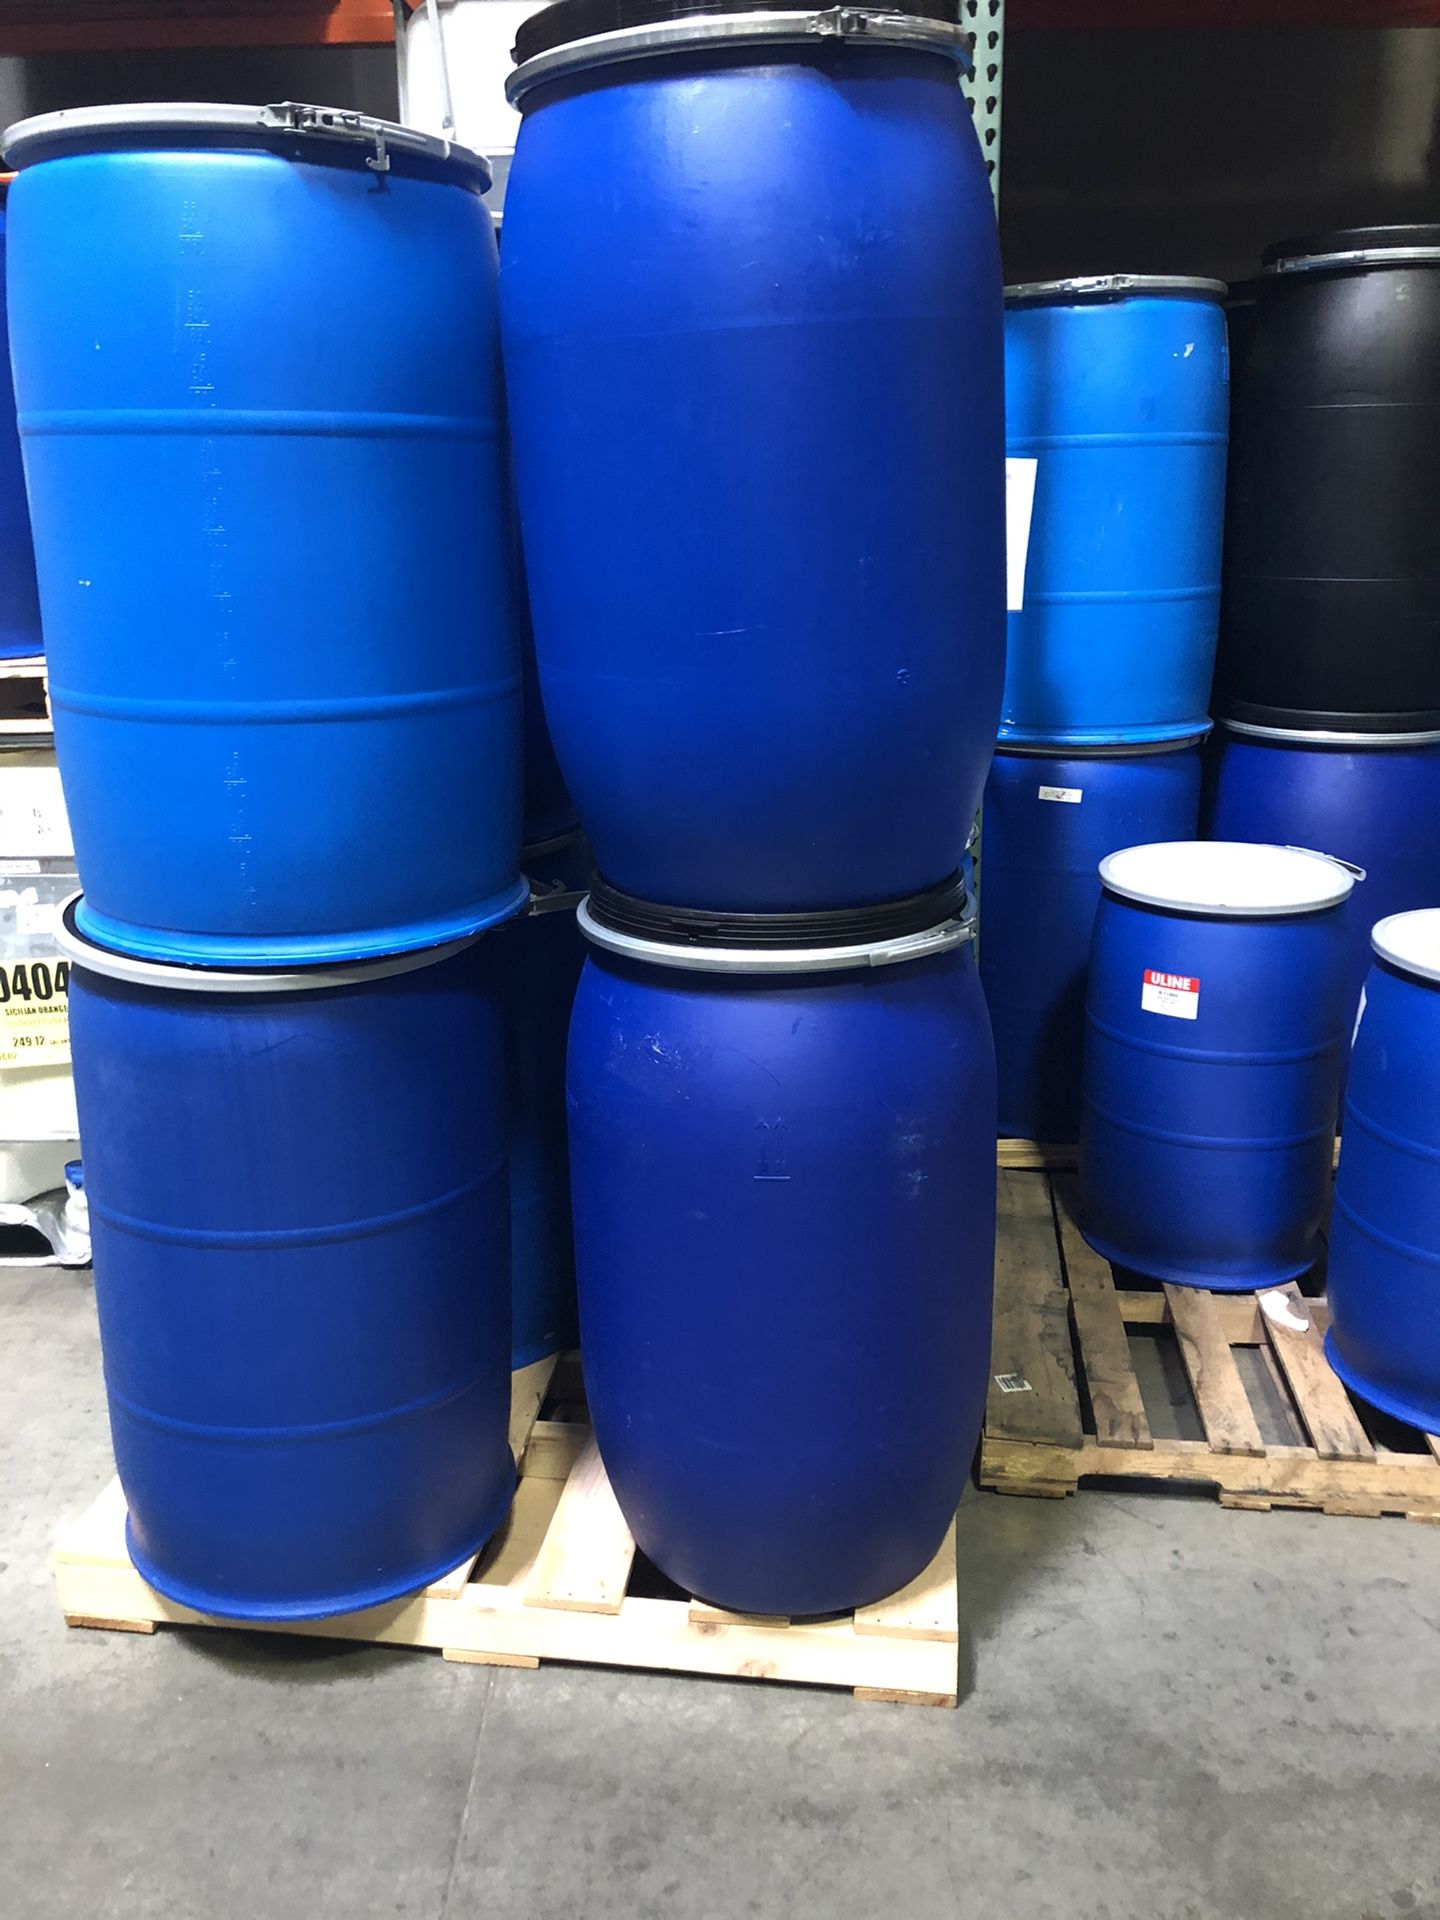 55 gallon drums $5 each